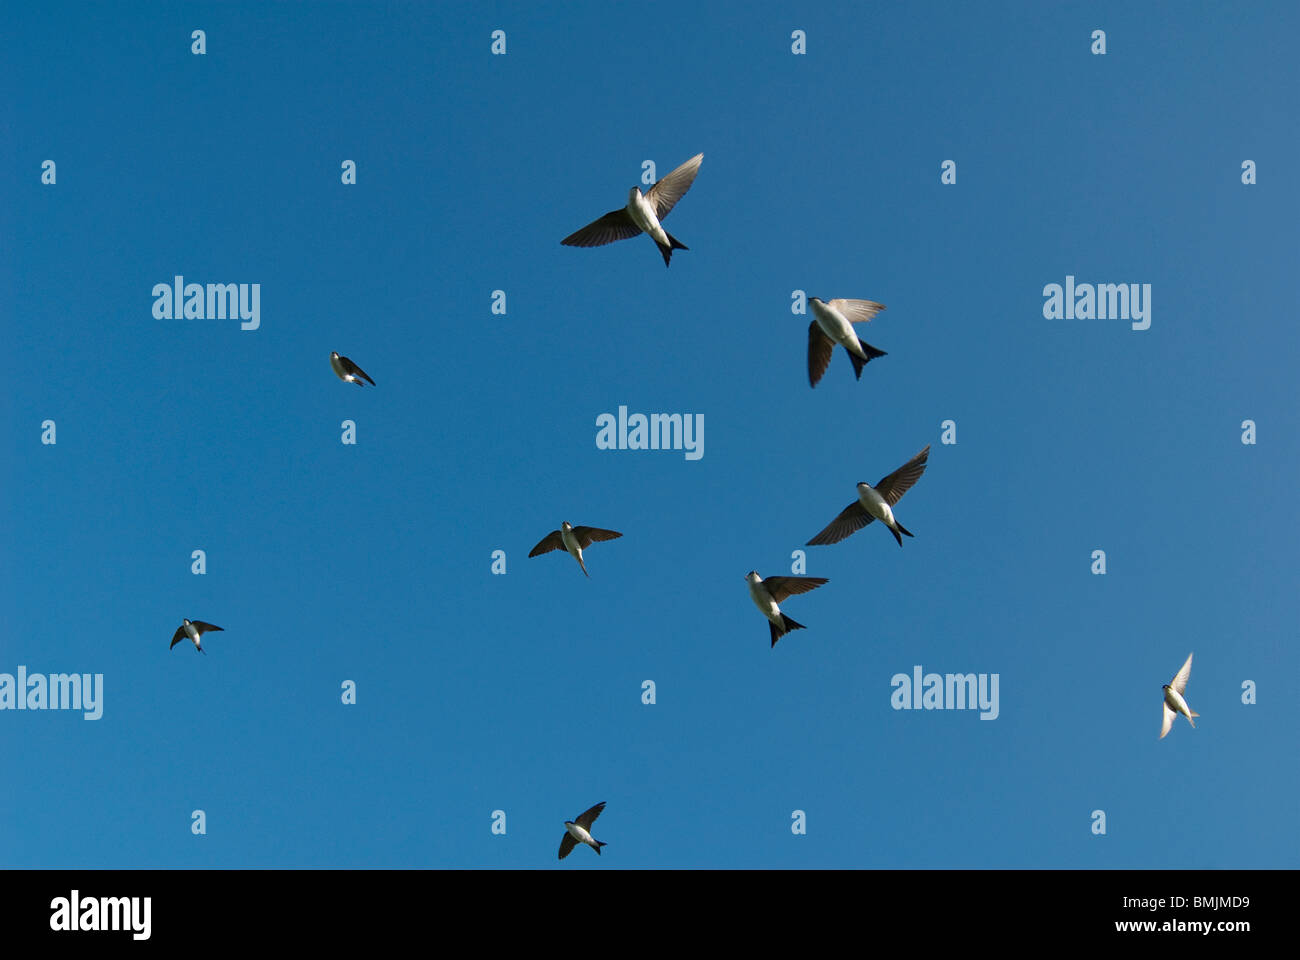 La Scandinavie, la Suède, l'Oland, avaler birds flying in sky Banque D'Images